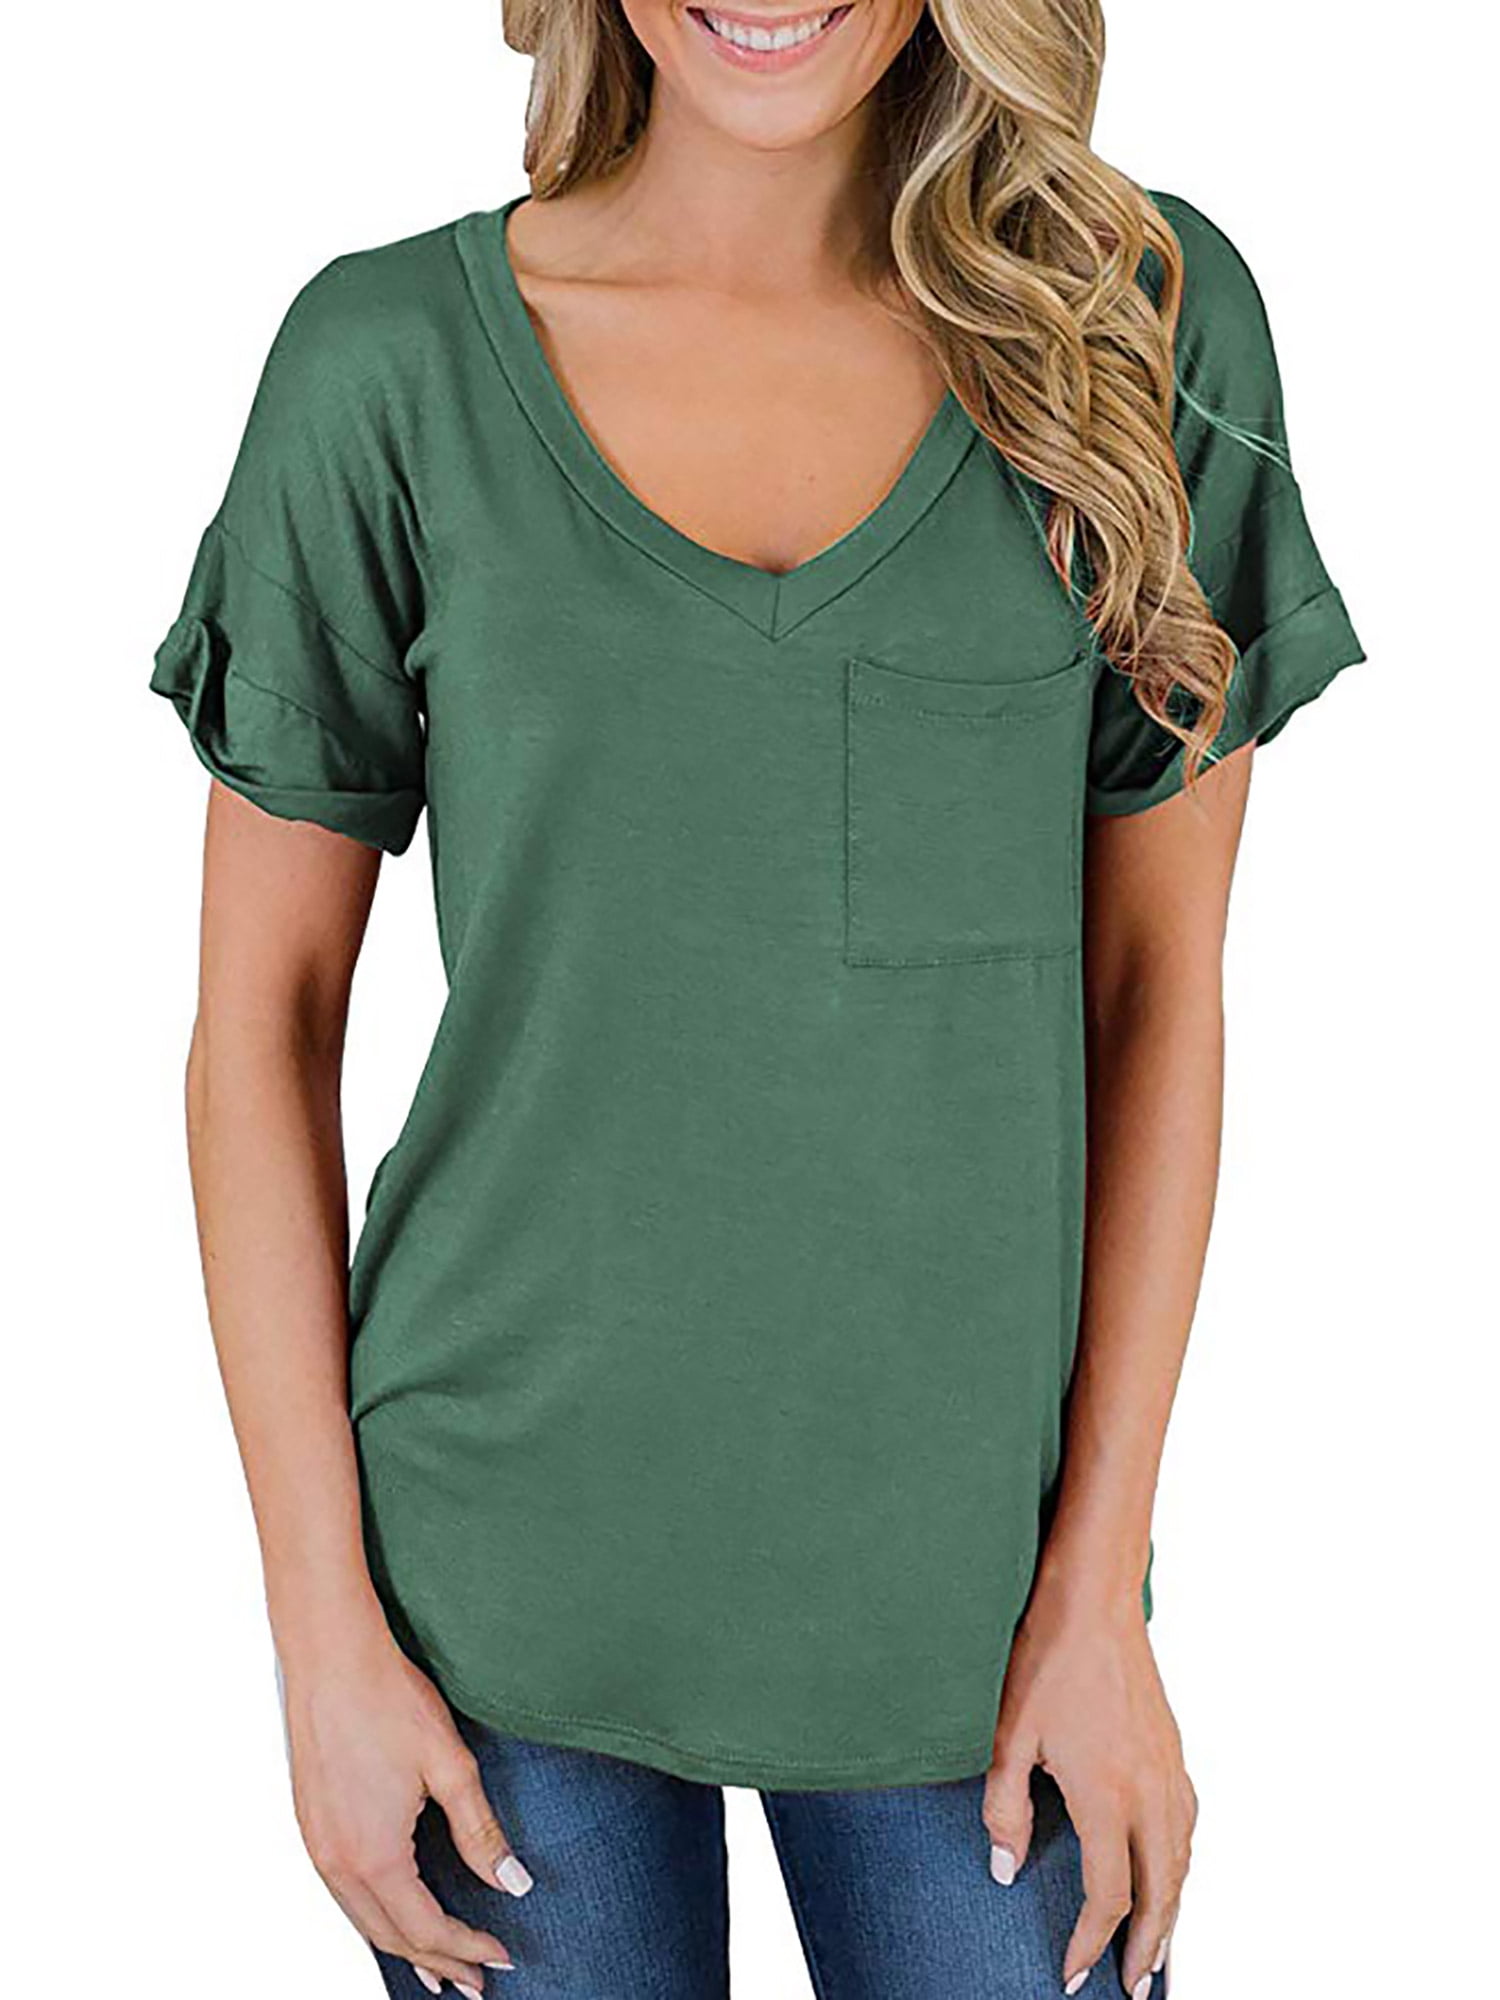 Selfieee - Selfieee Women's Summer Tops Short Sleeve V Neck T Shirts ...